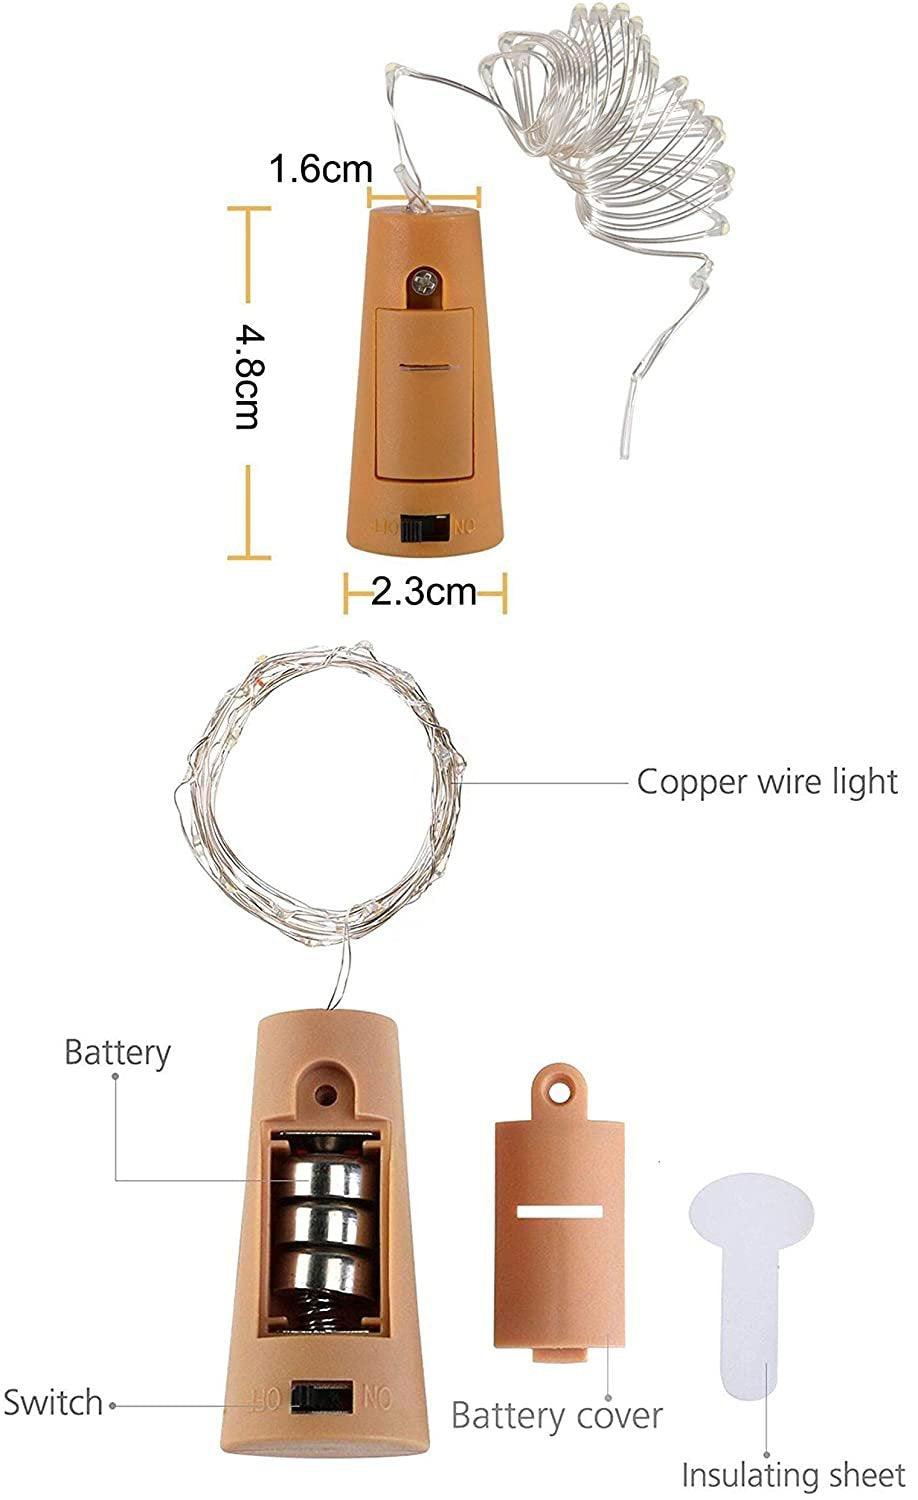 Wine Bottle Lights with Cork for DIY - Decotree.co Online Shop